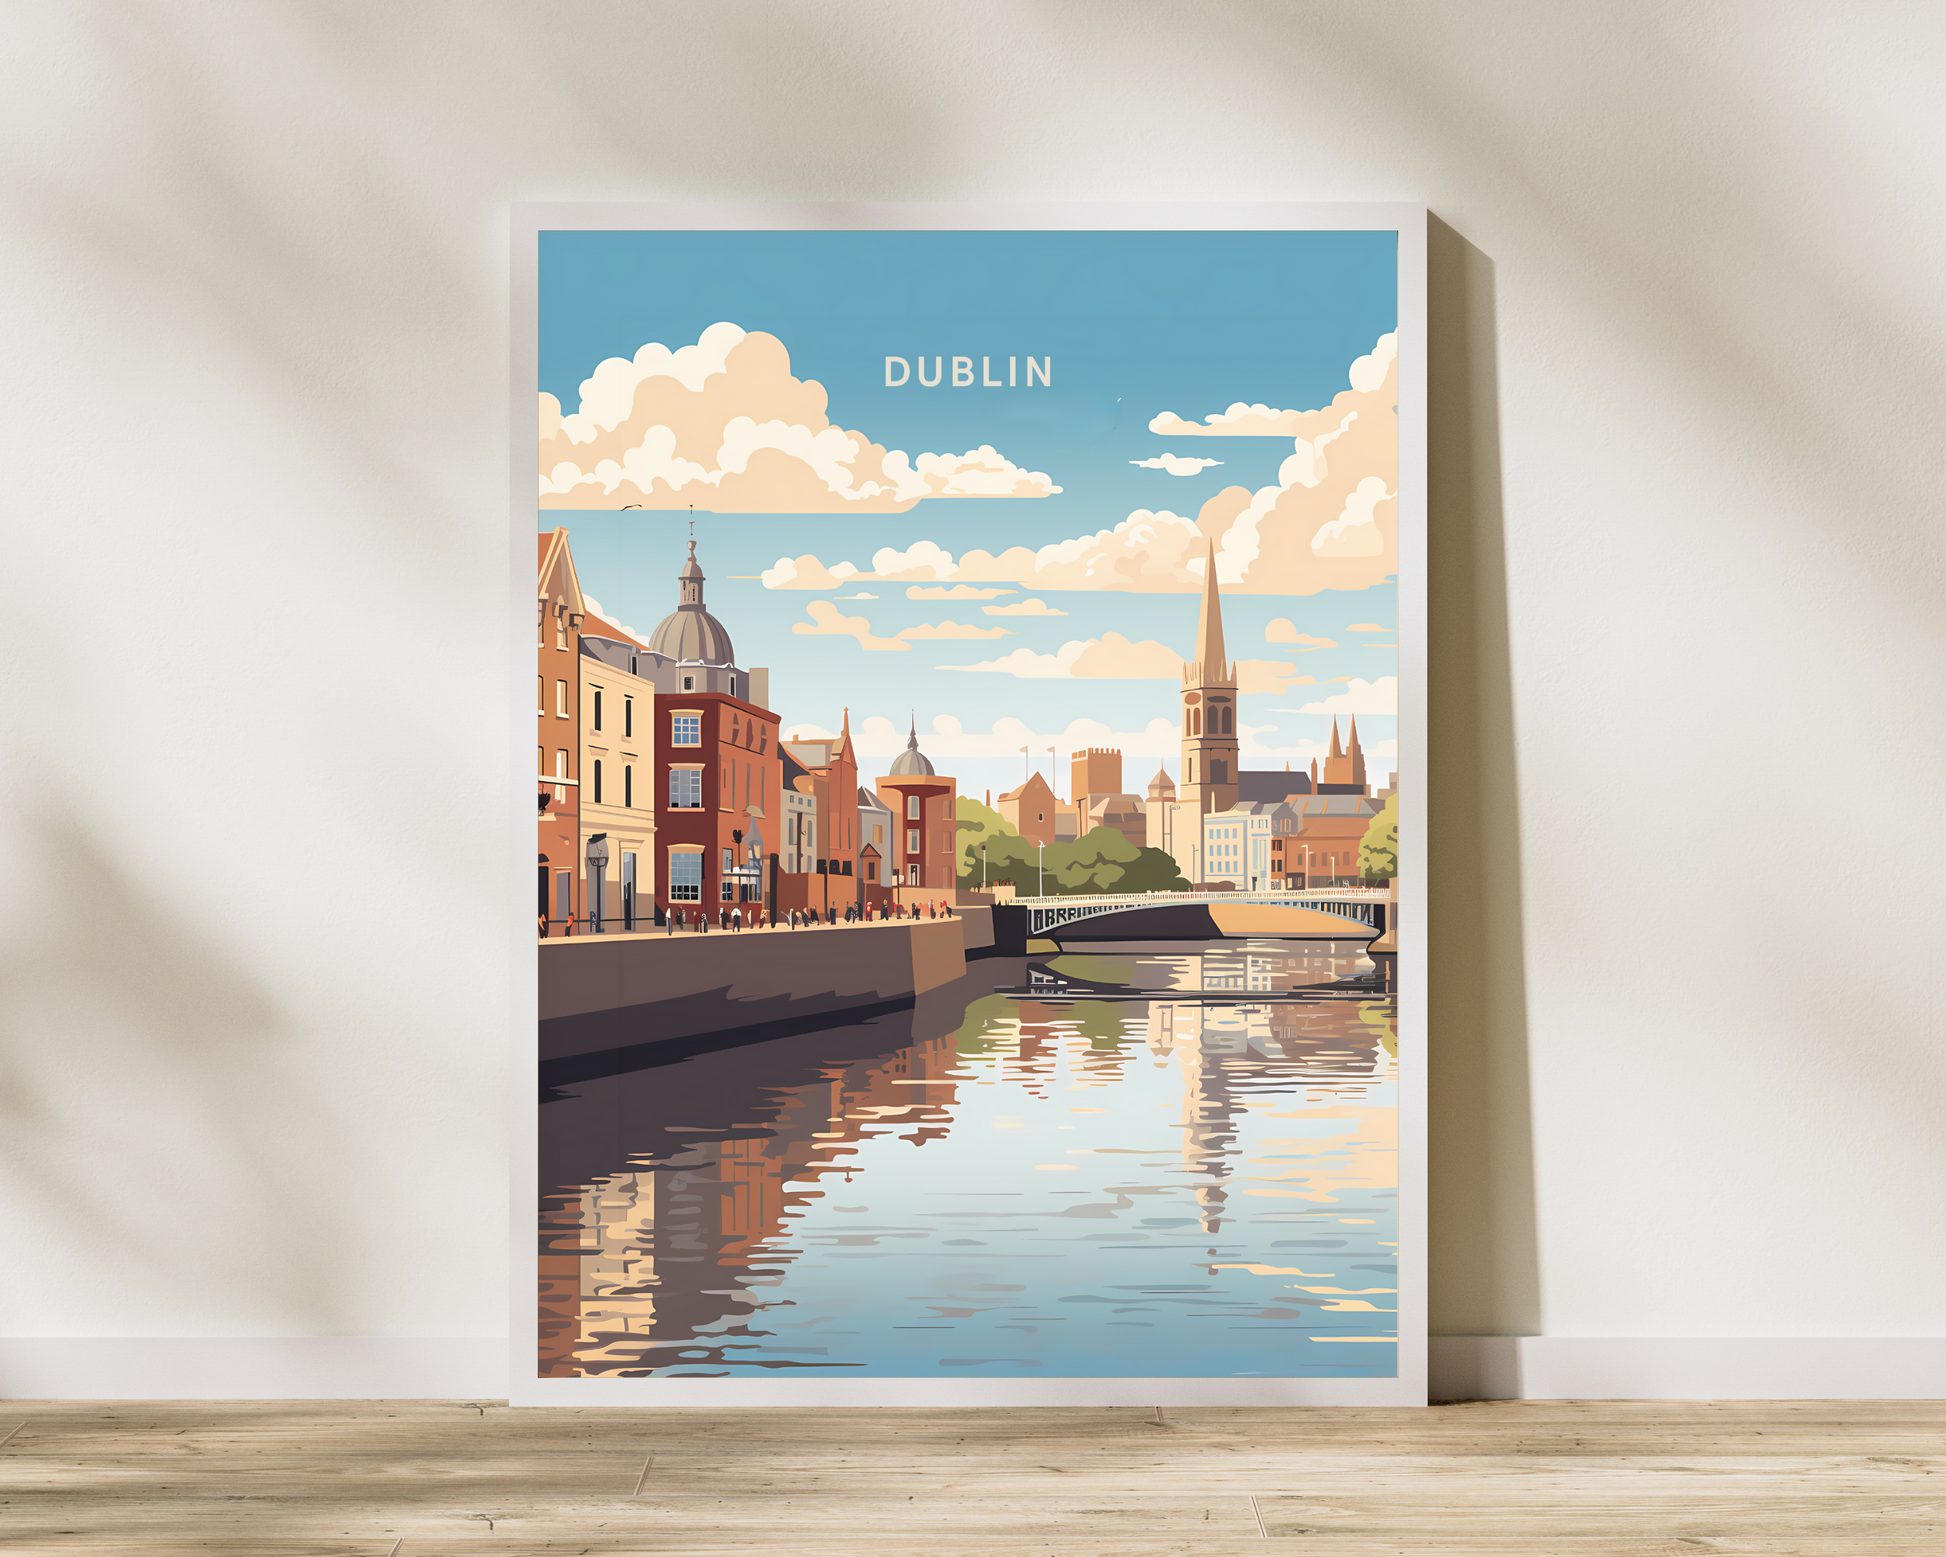 Dublin Ireland Travel Poster Print - Pitchers Design